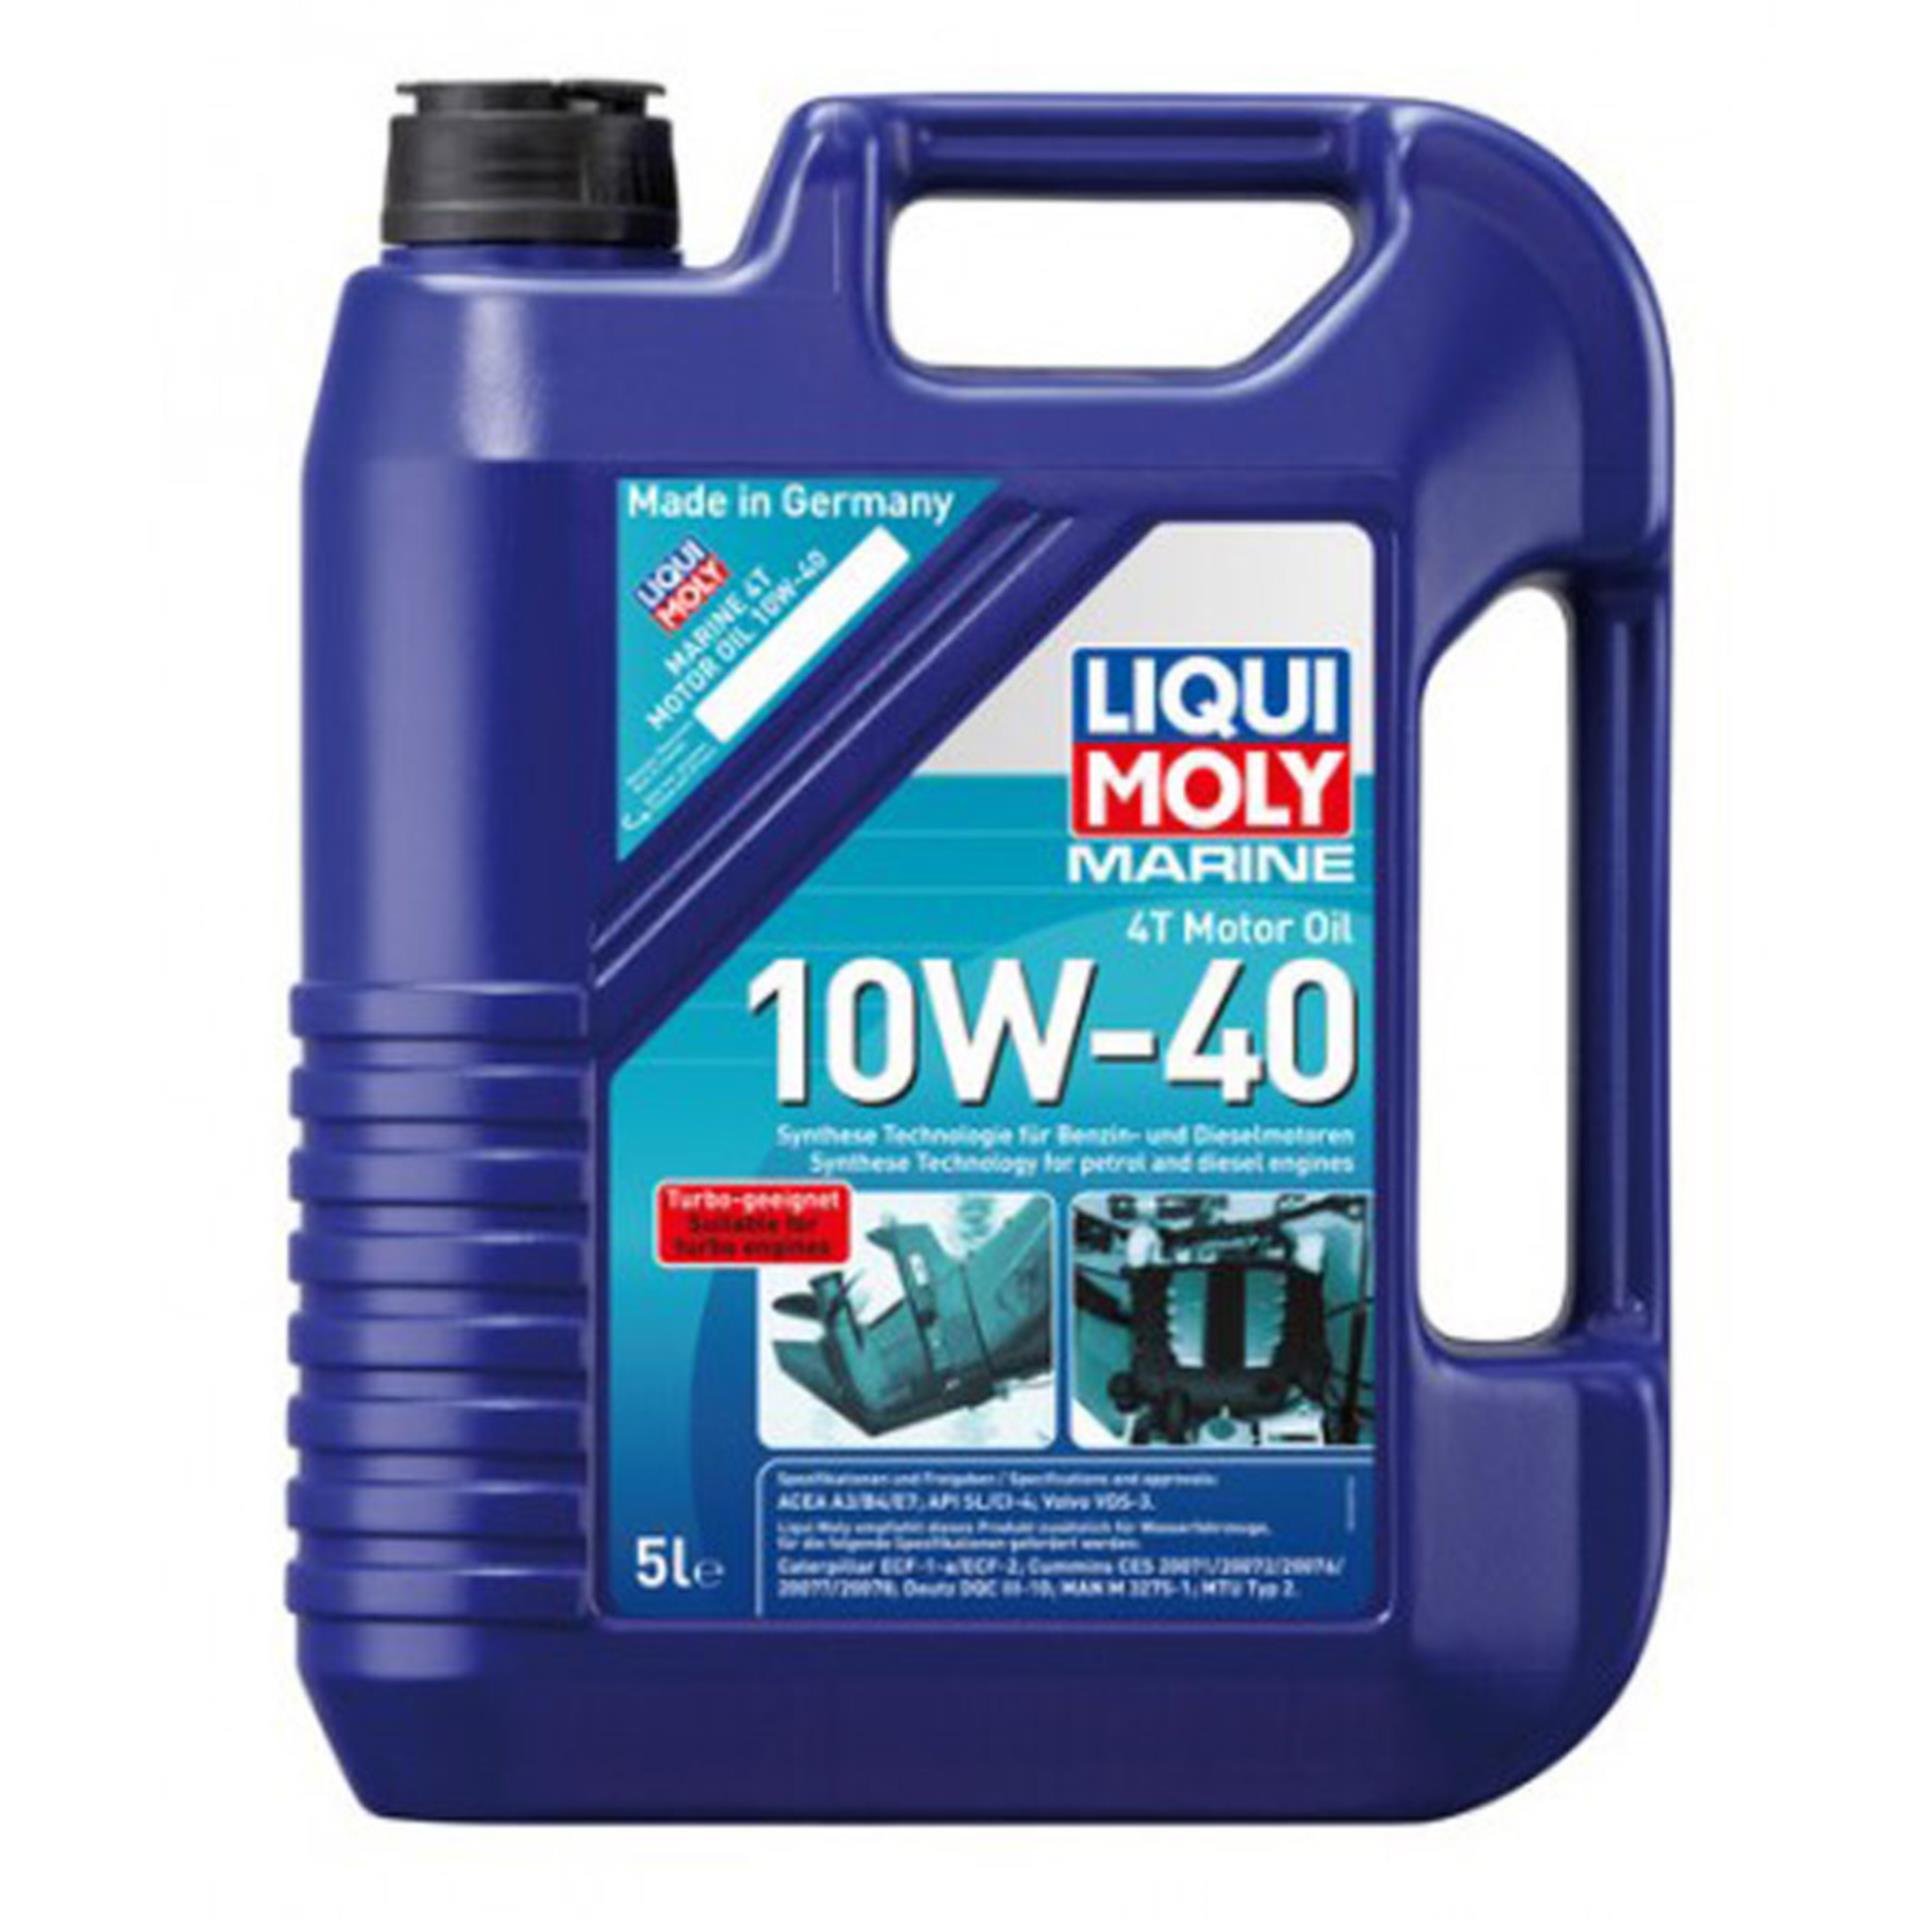 Liqui Moly 4T Motor Oil 10W-40, 5 Liter